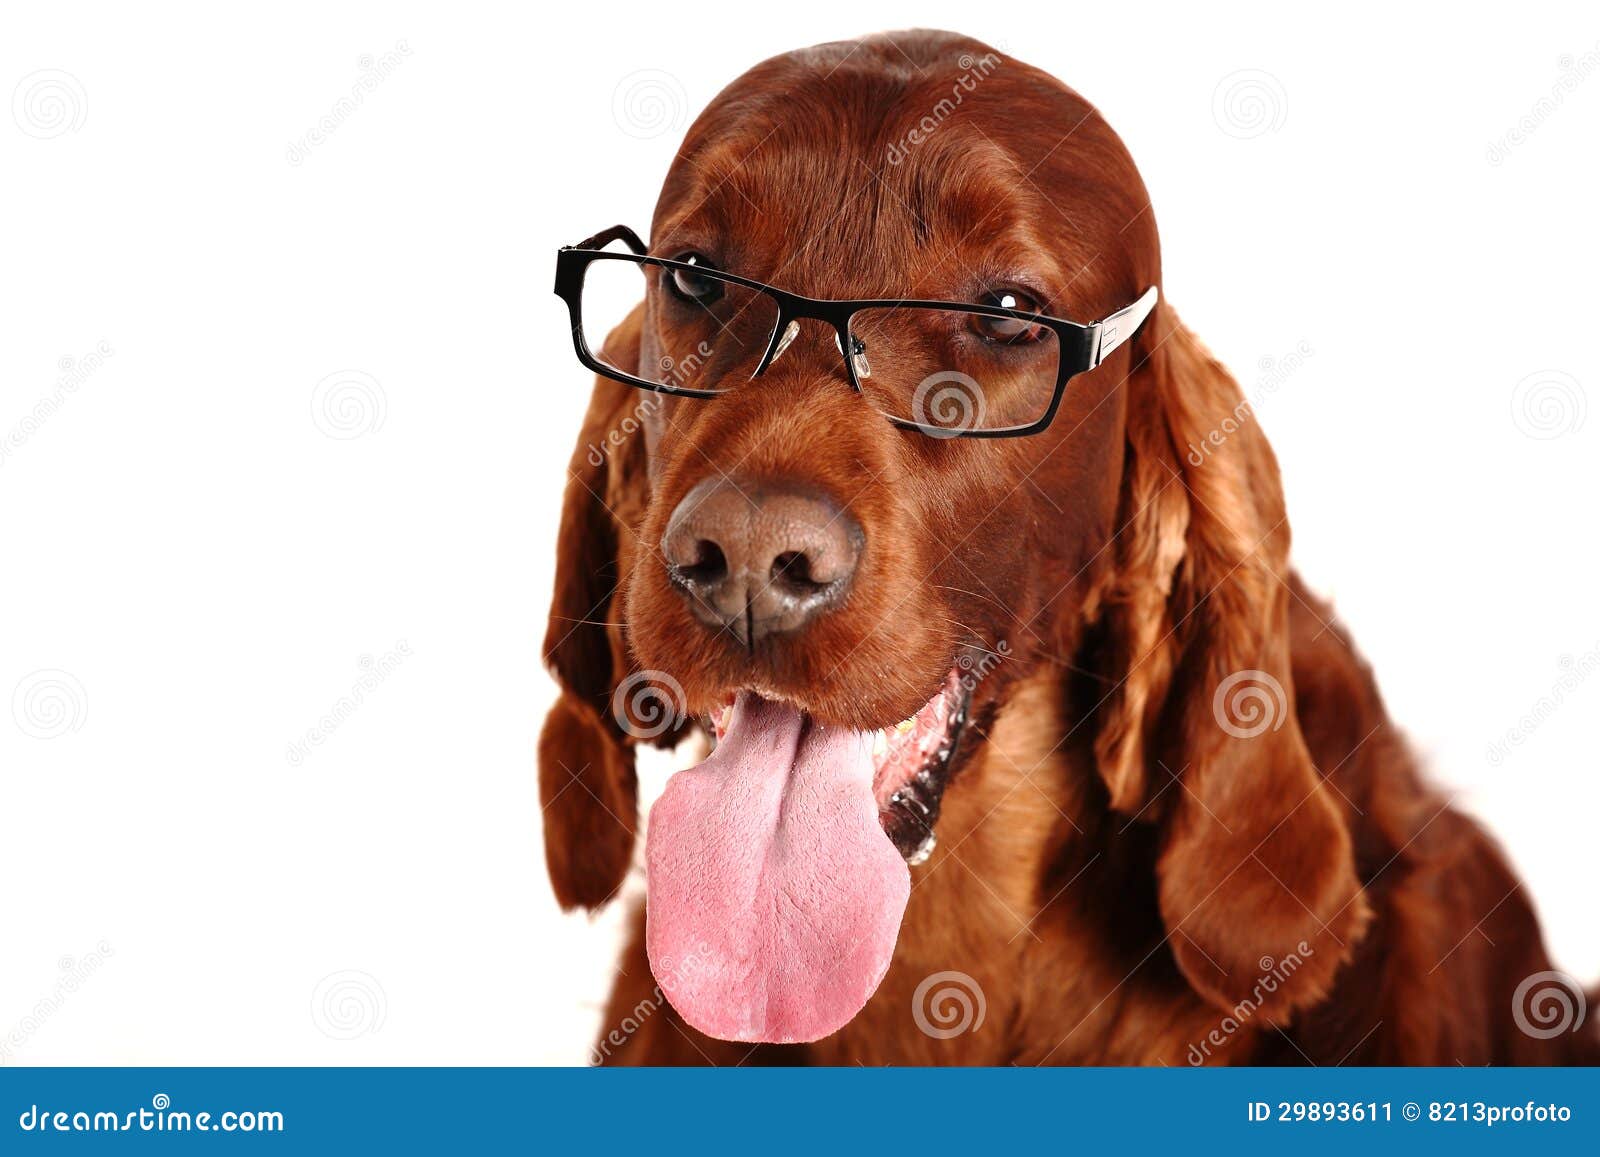 Irish Red Setter Dog In Glasses Stock Image - Image: 298936111300 x 957